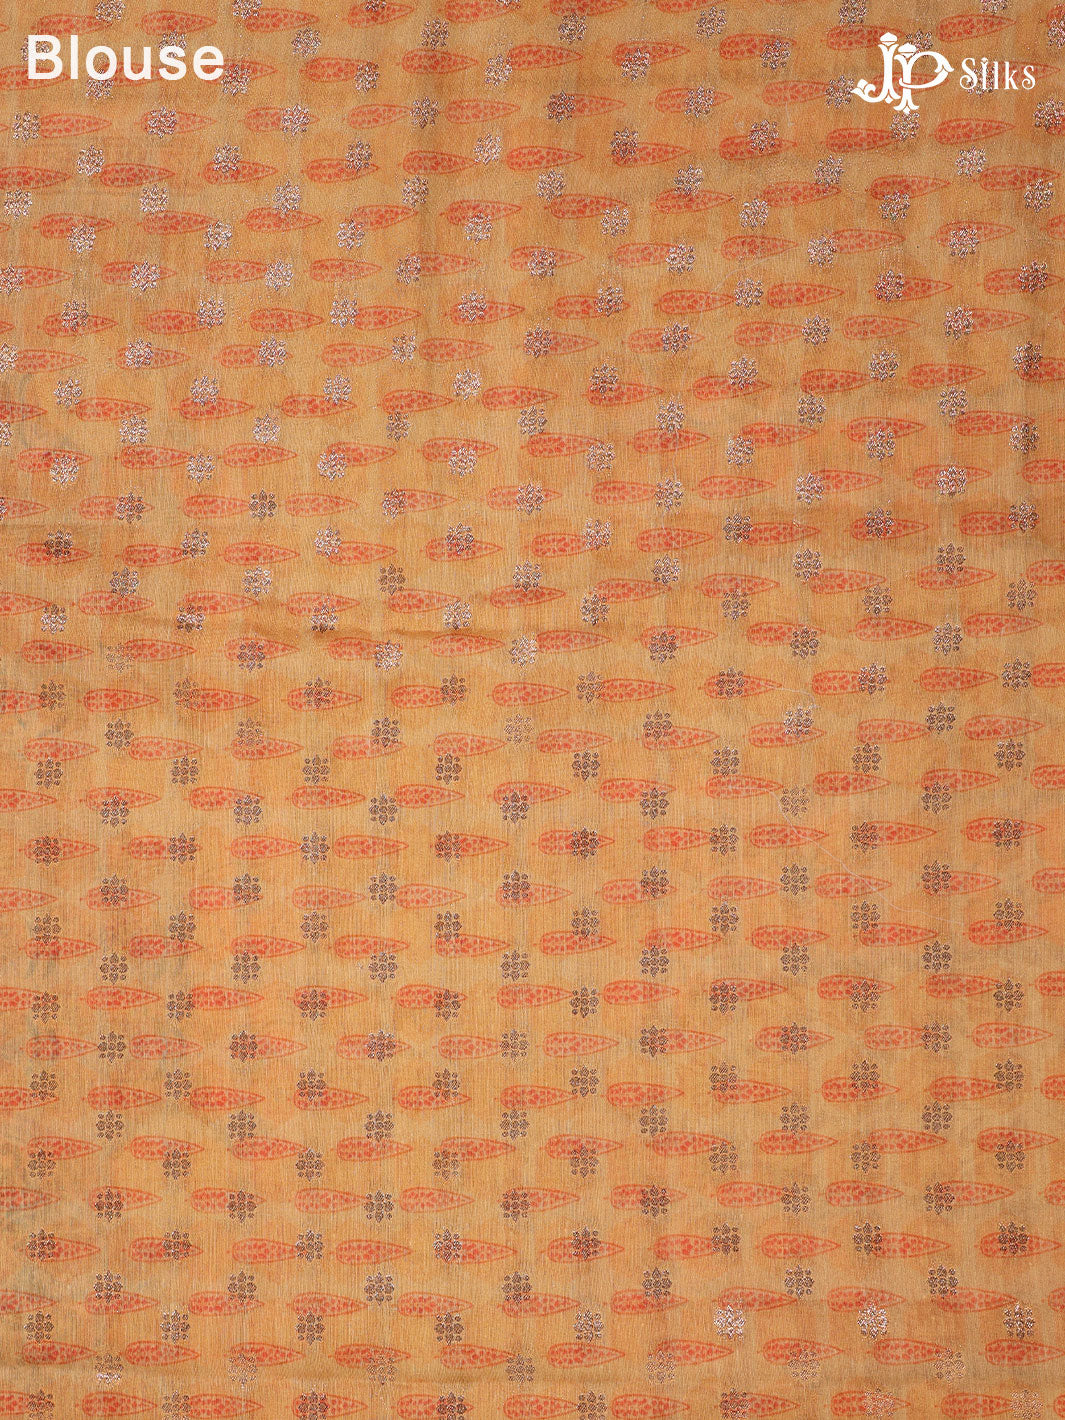 Peach and Orange Oraganza Saree - D7163 - View 2